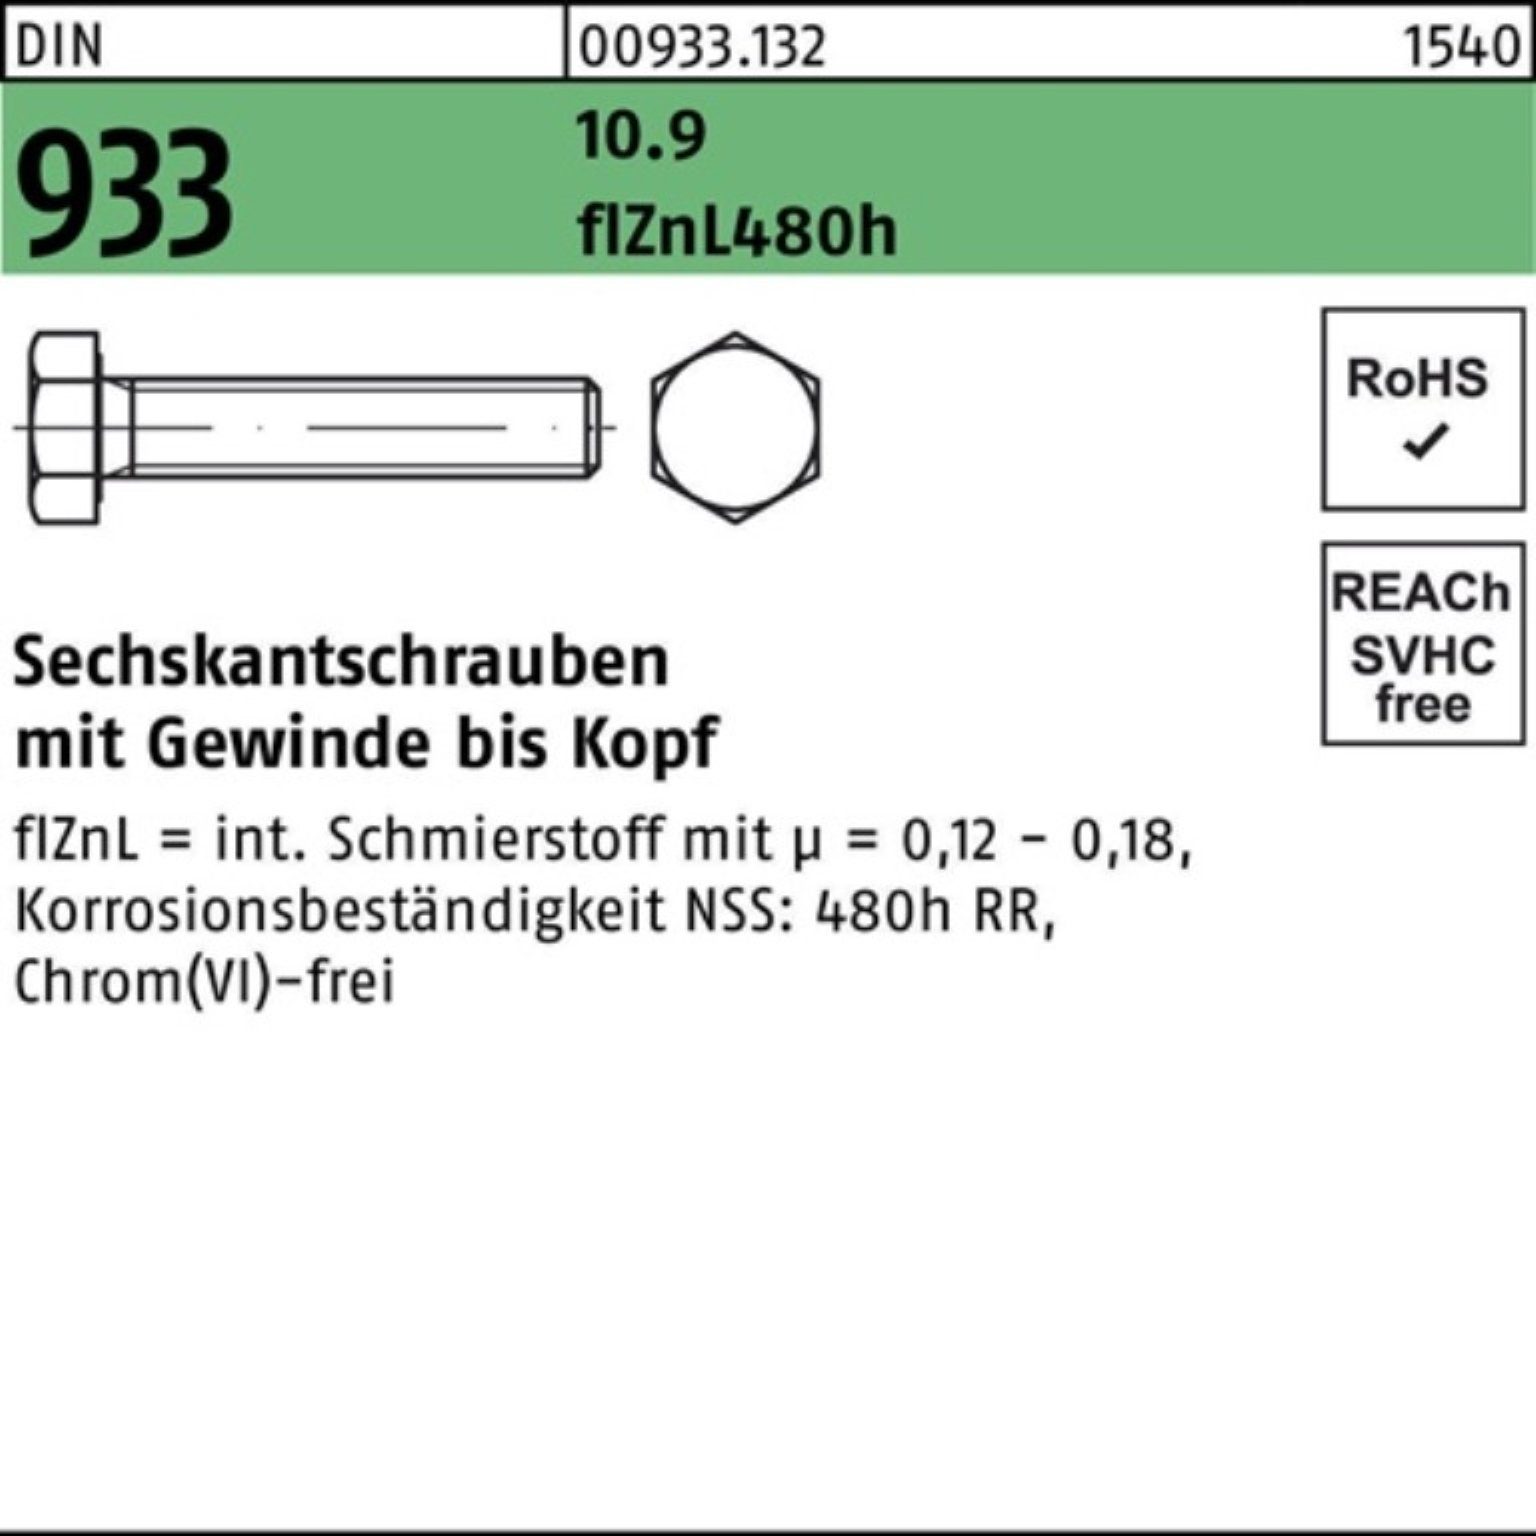 100er Pack Sechskantschraube 10.9 933 50 Sechskantschraube M20x VG flZnL/nc/x/x/480h DIN Reyher